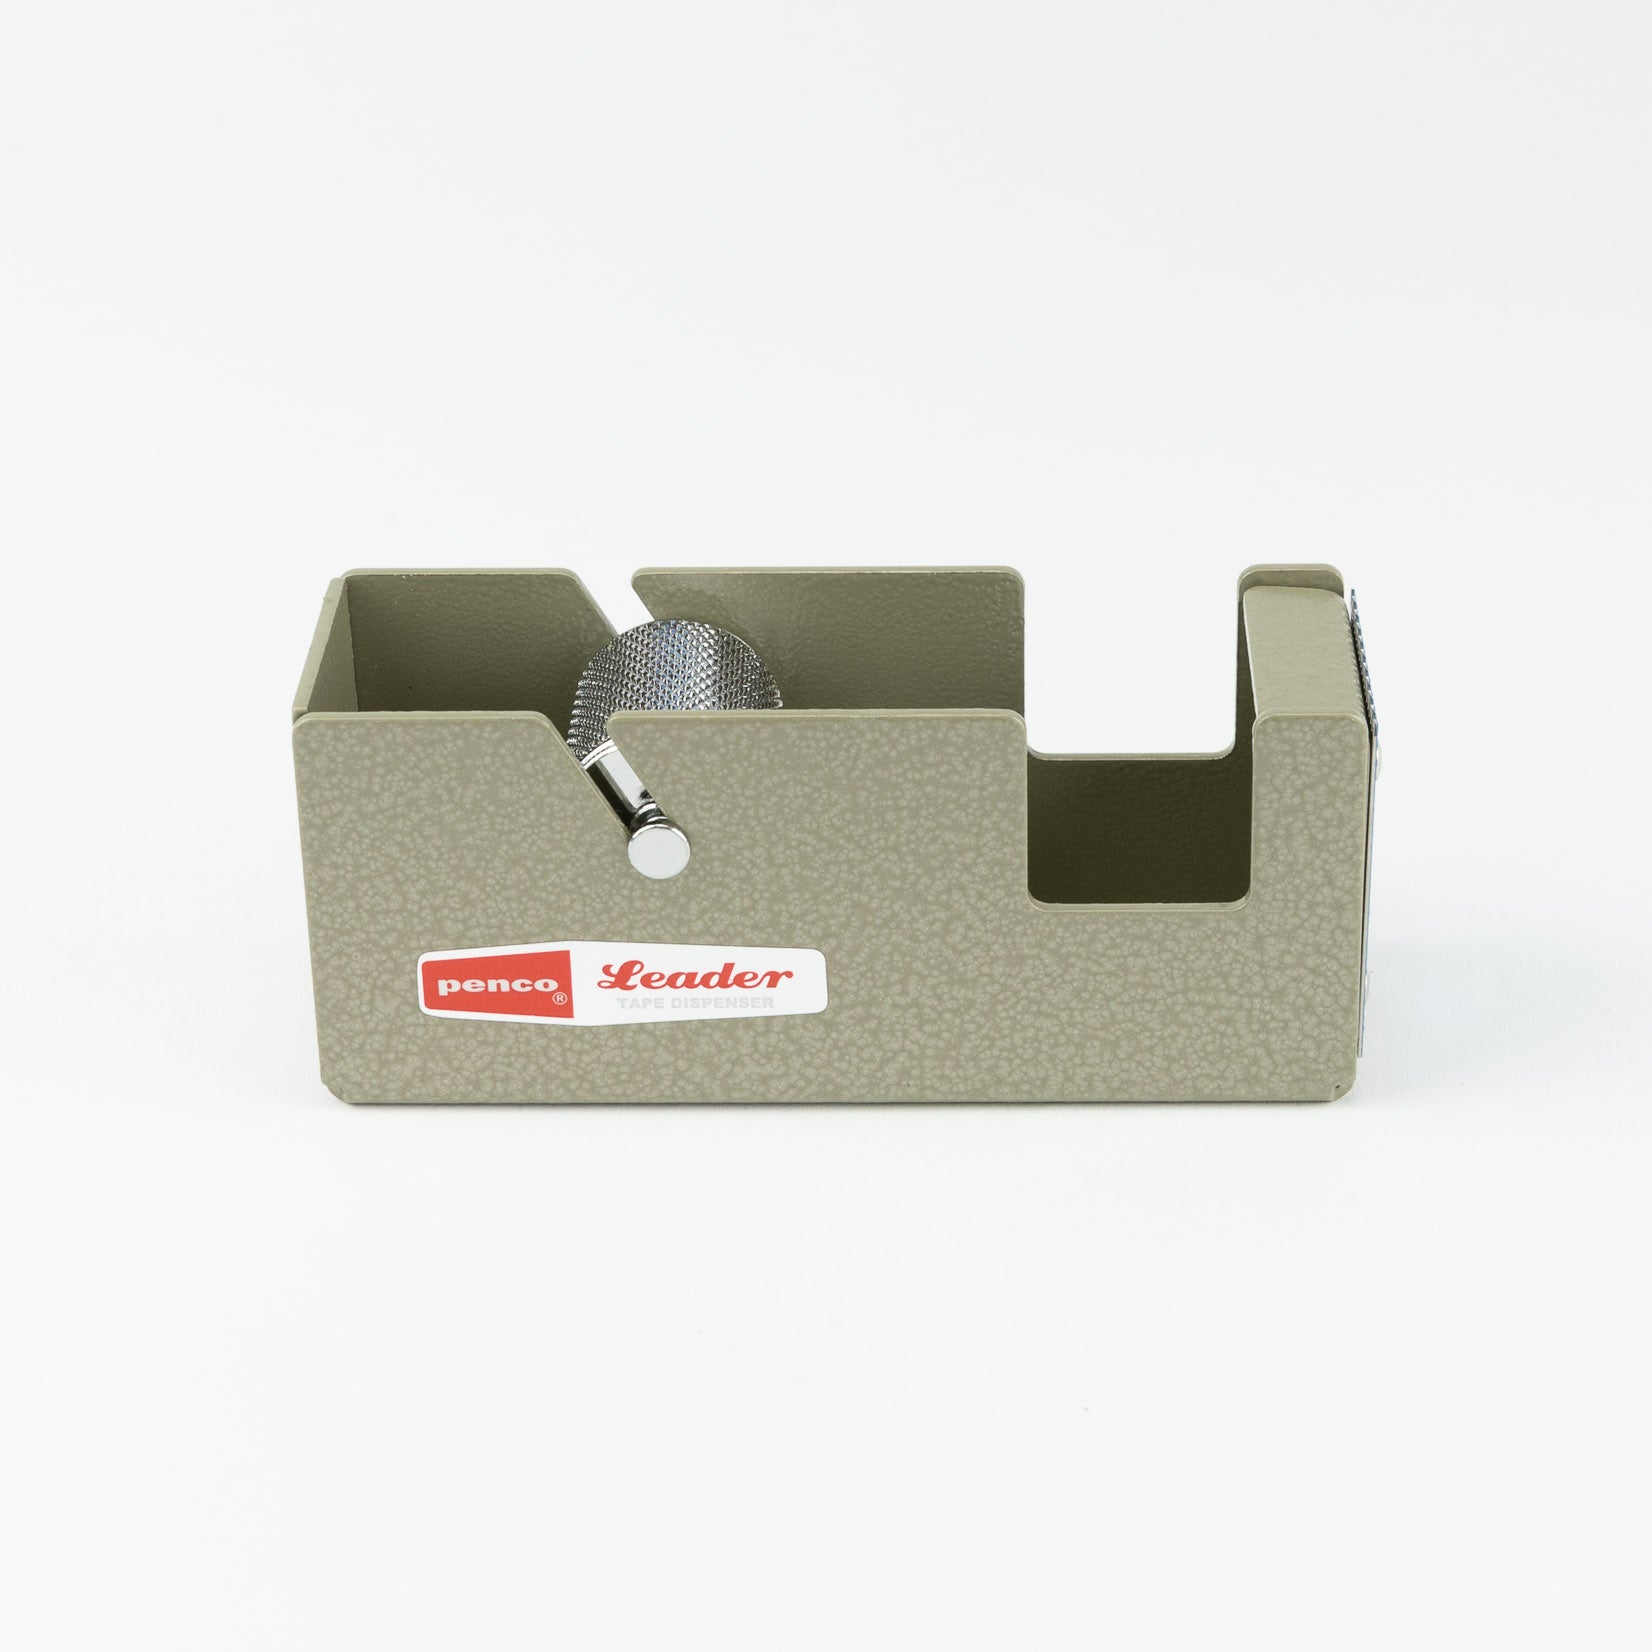 Penco Japan Klebebandabroller Tape Dispenser grau grün